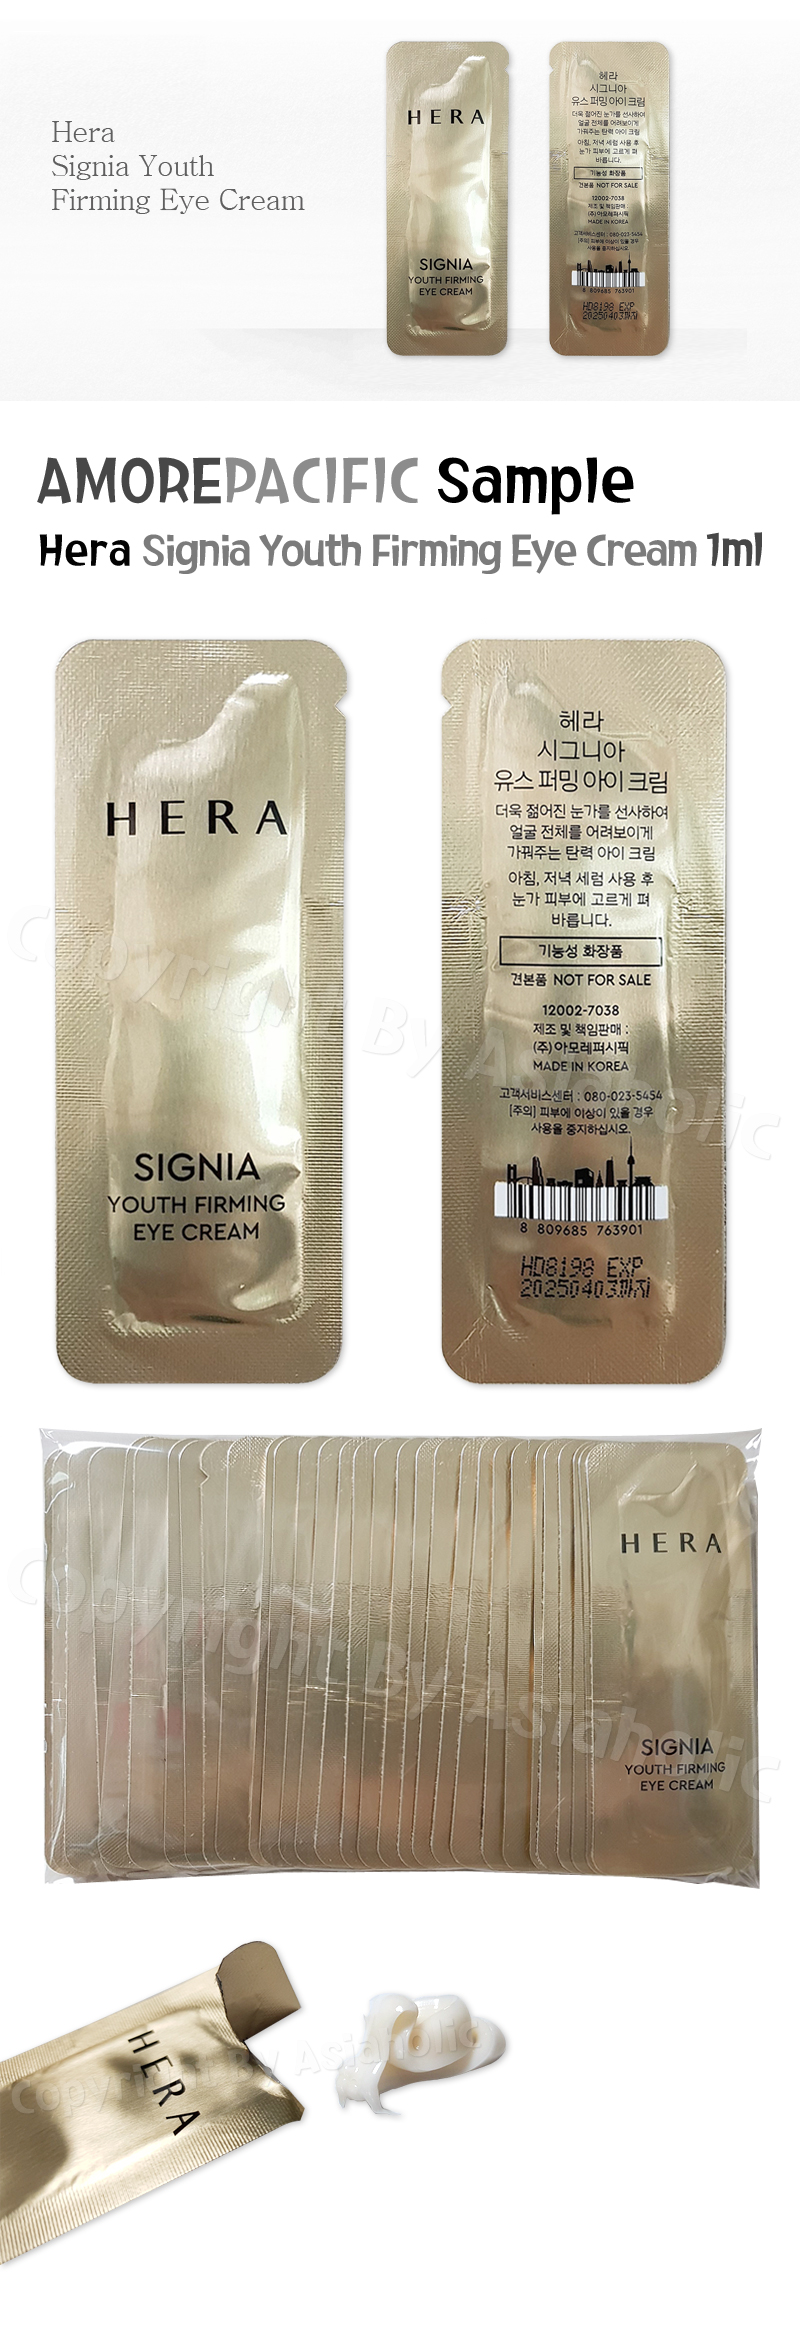 HERA Signia Youth Firming Eye Cream 1ml x 40pcs (40ml) Sample Newest Version